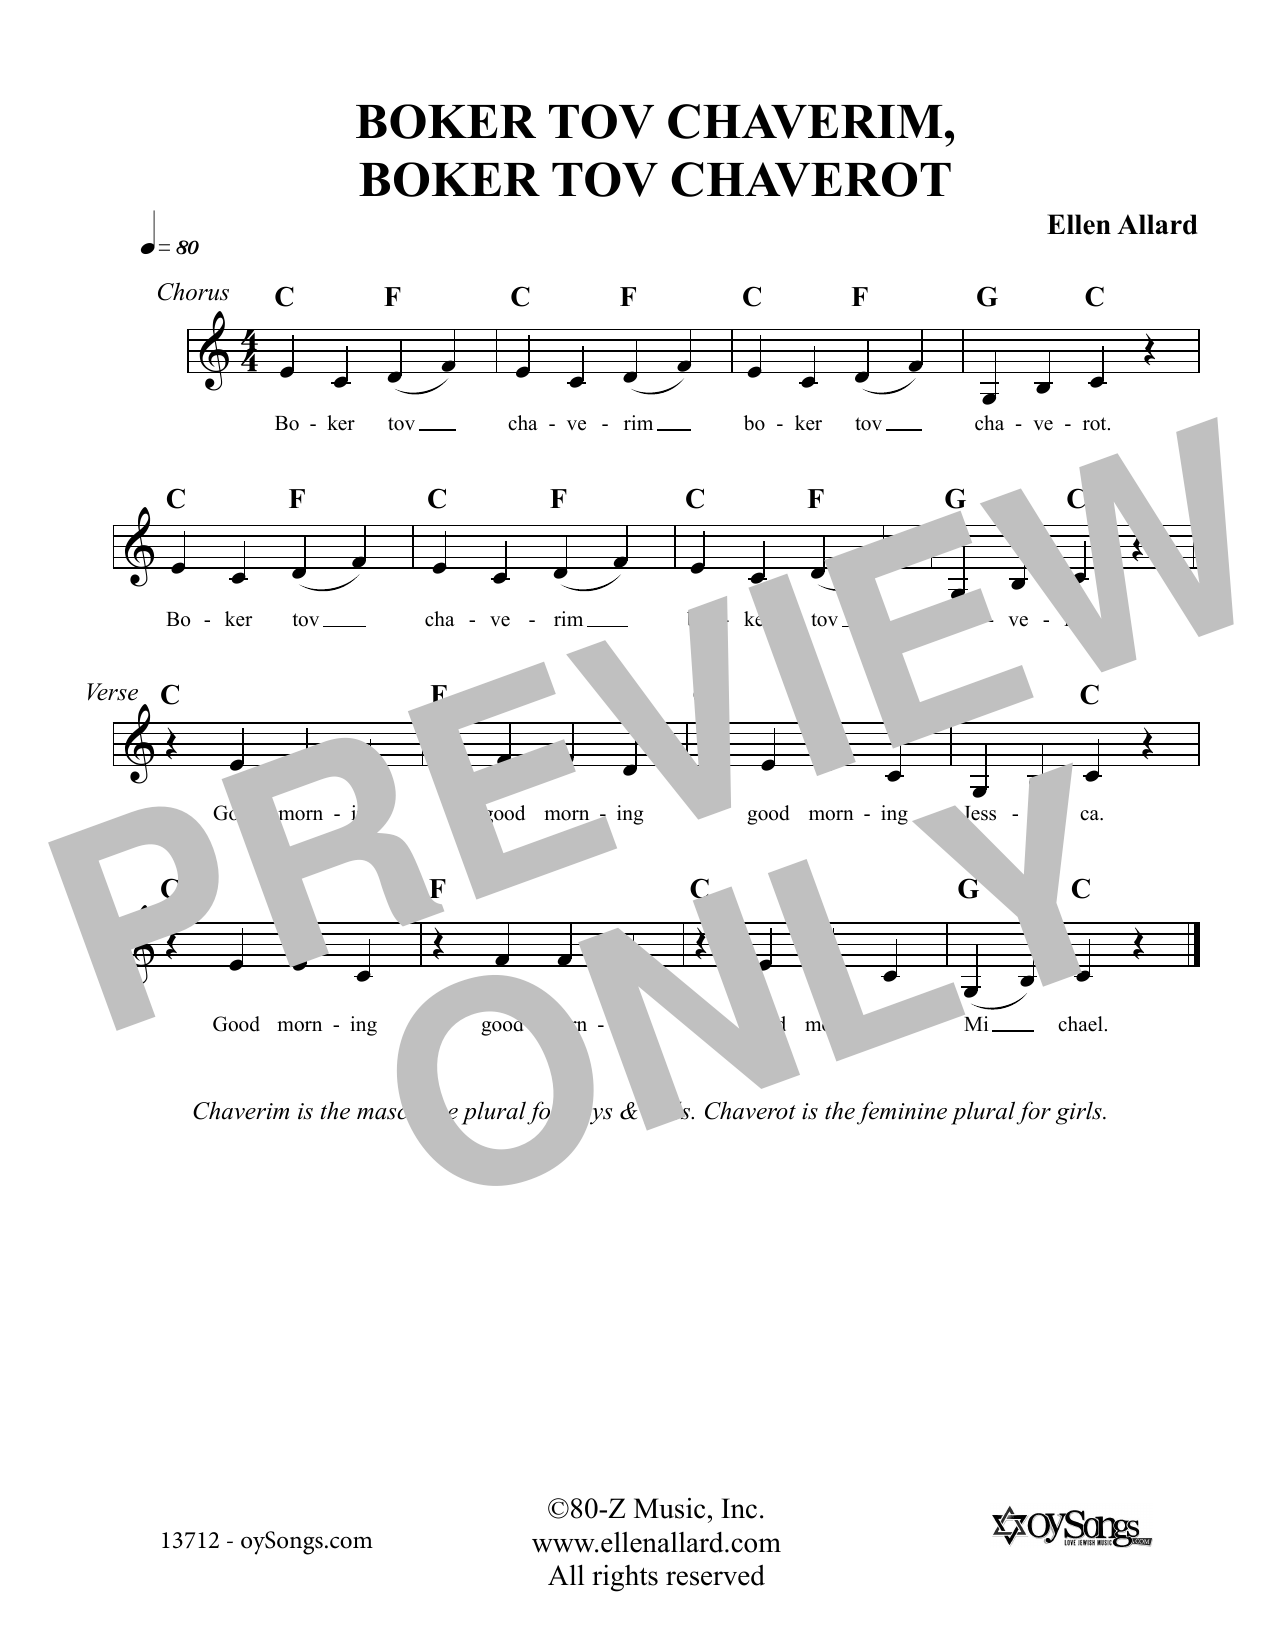 Ellen Allard Boker Tov Chaverim Chaverot Sheet Music Notes & Chords for Melody Line, Lyrics & Chords - Download or Print PDF